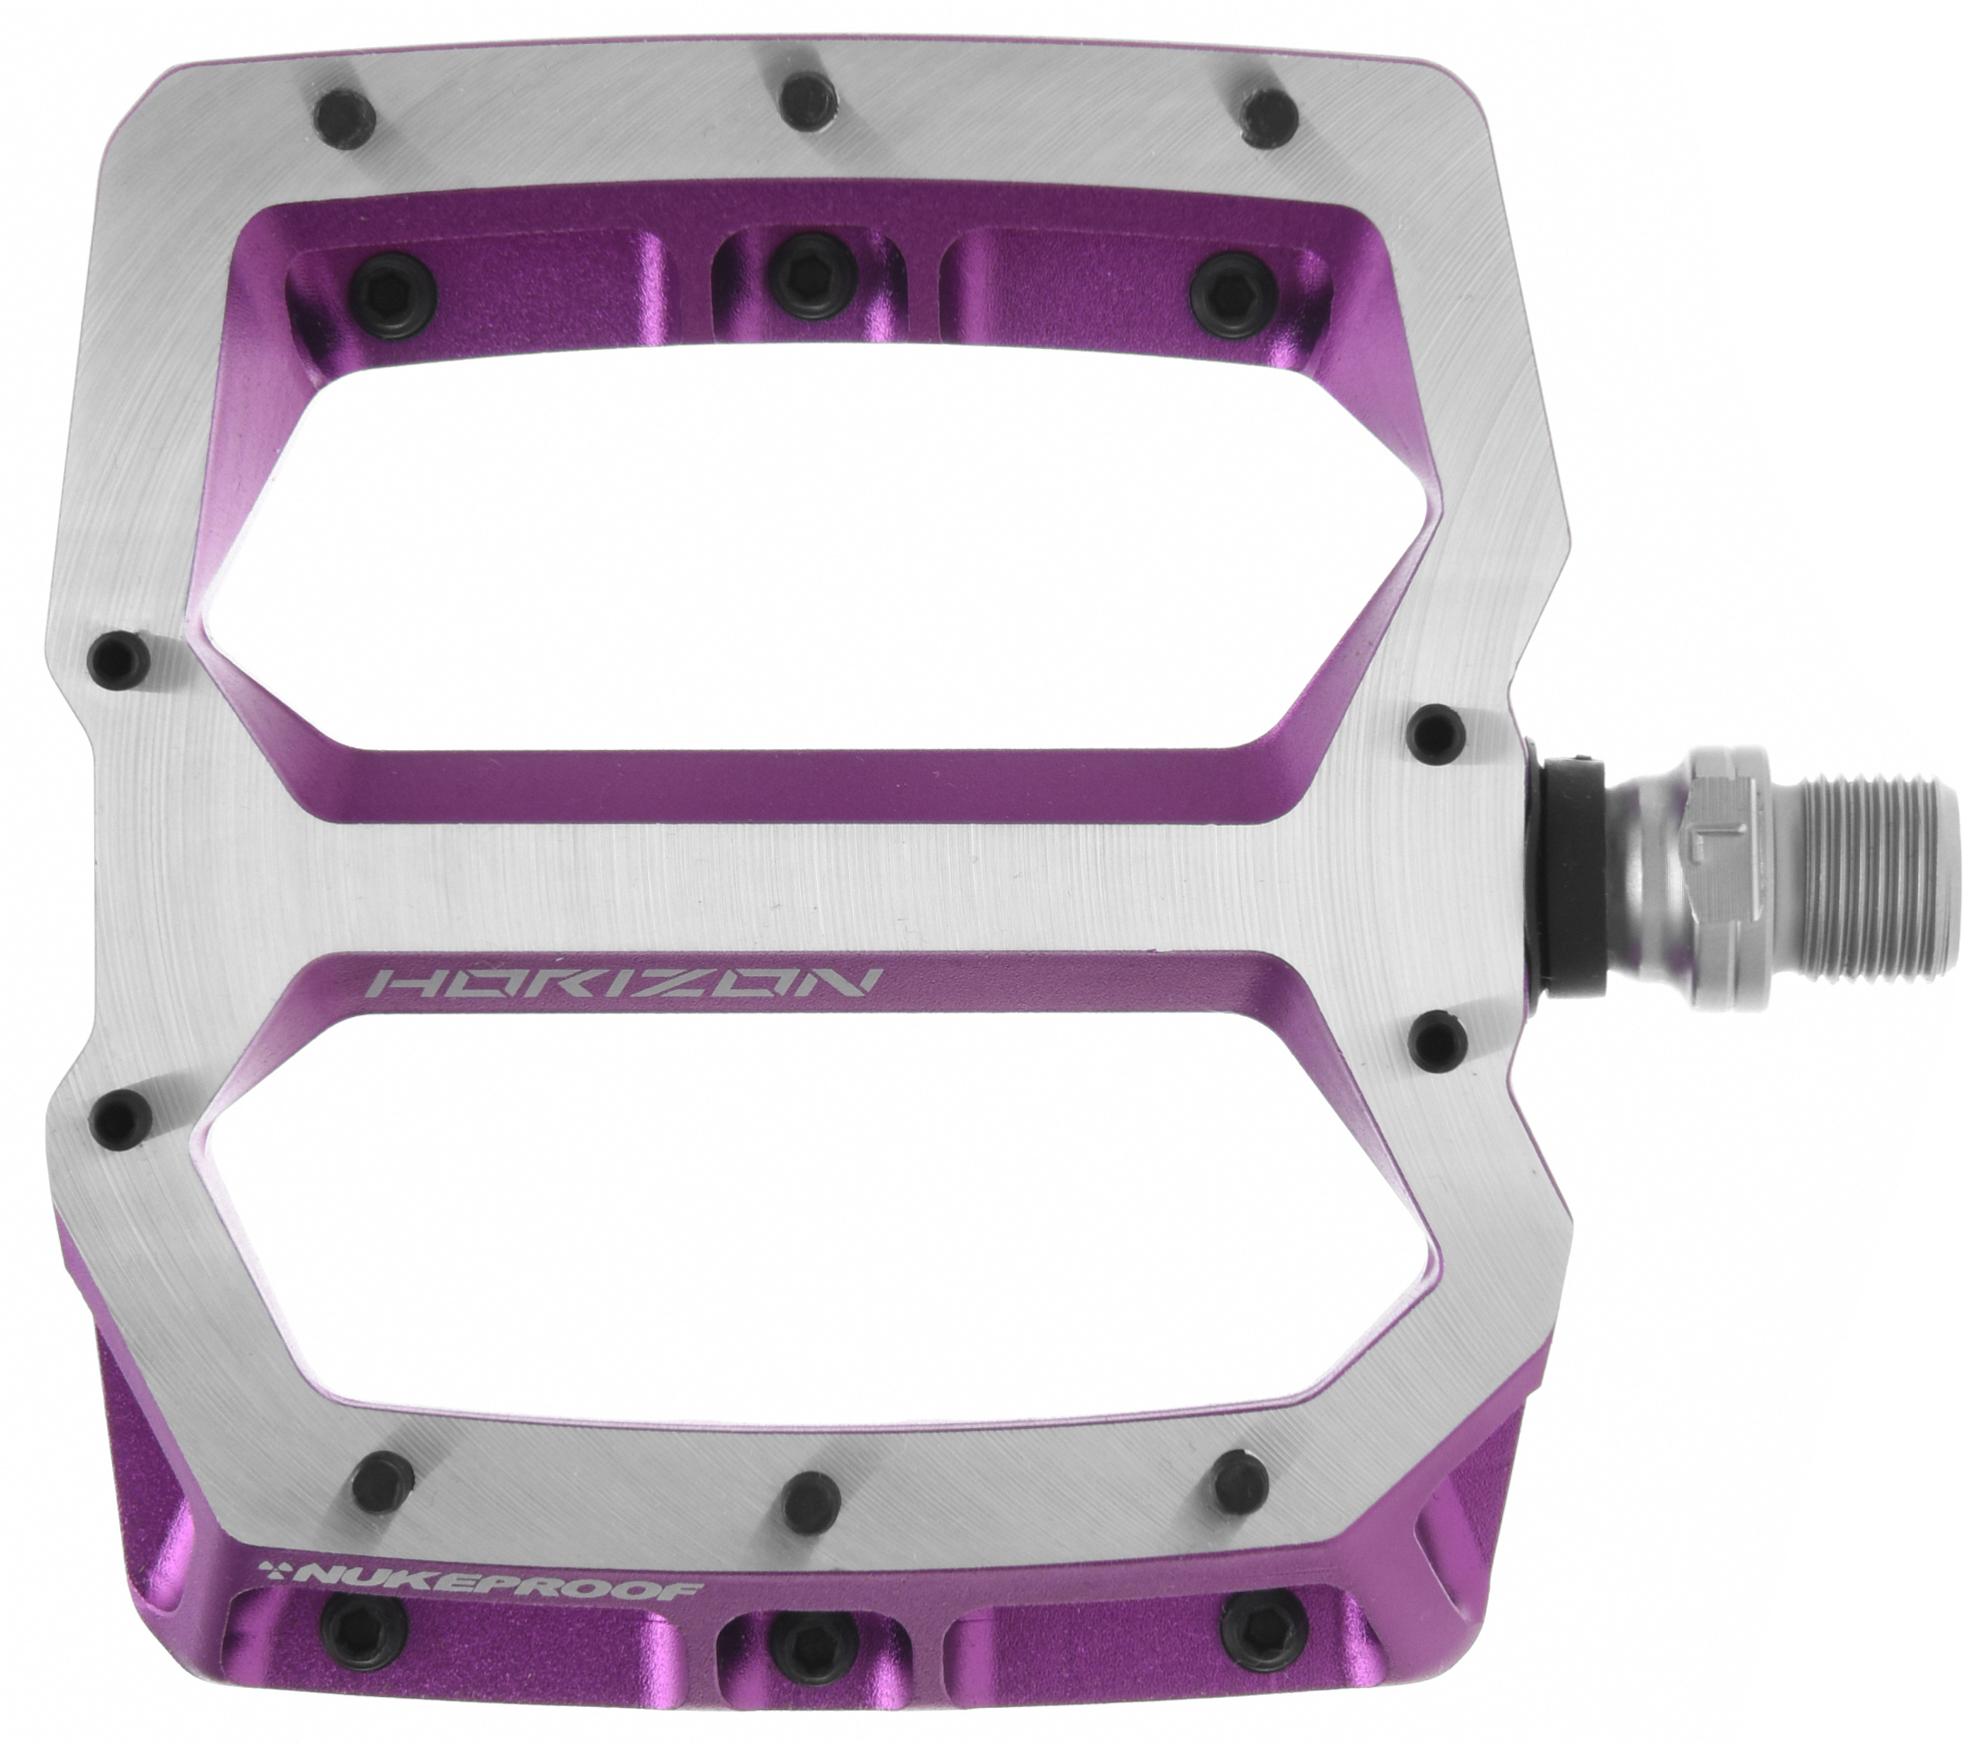 Nukeproof Horizon Pro Downhill Flat Pedals - Purple